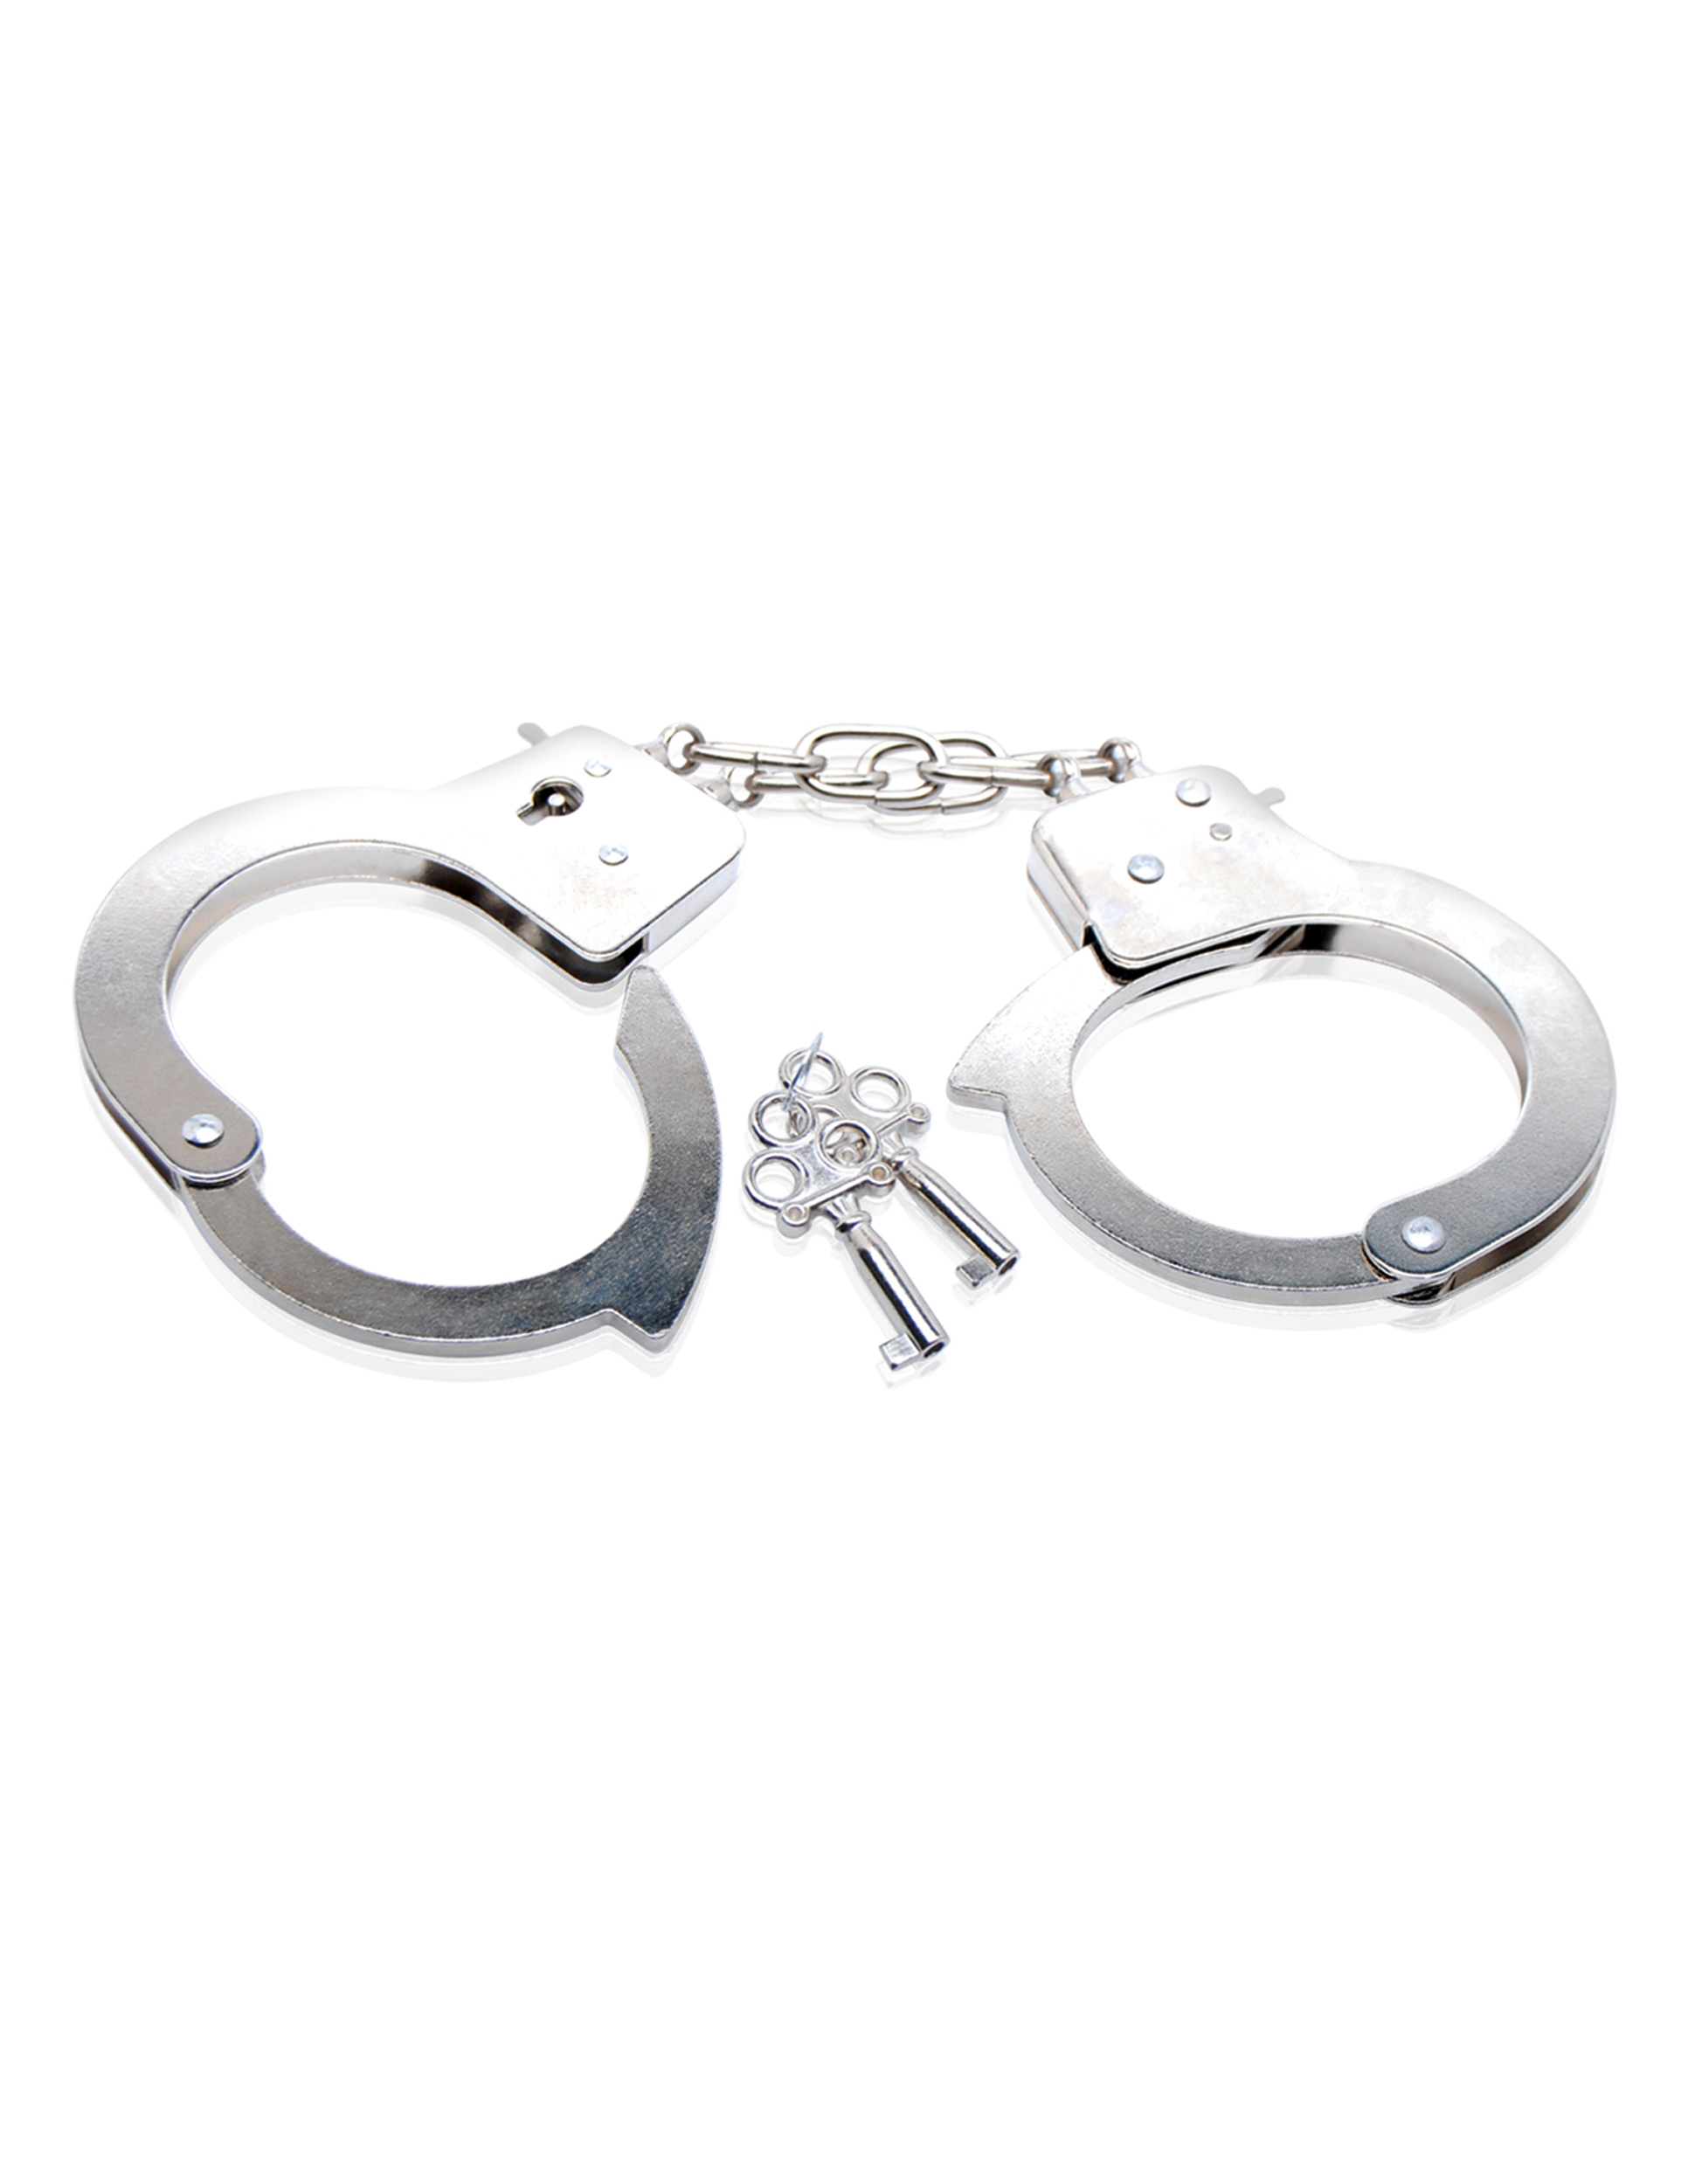 Professional Police Handcuffs